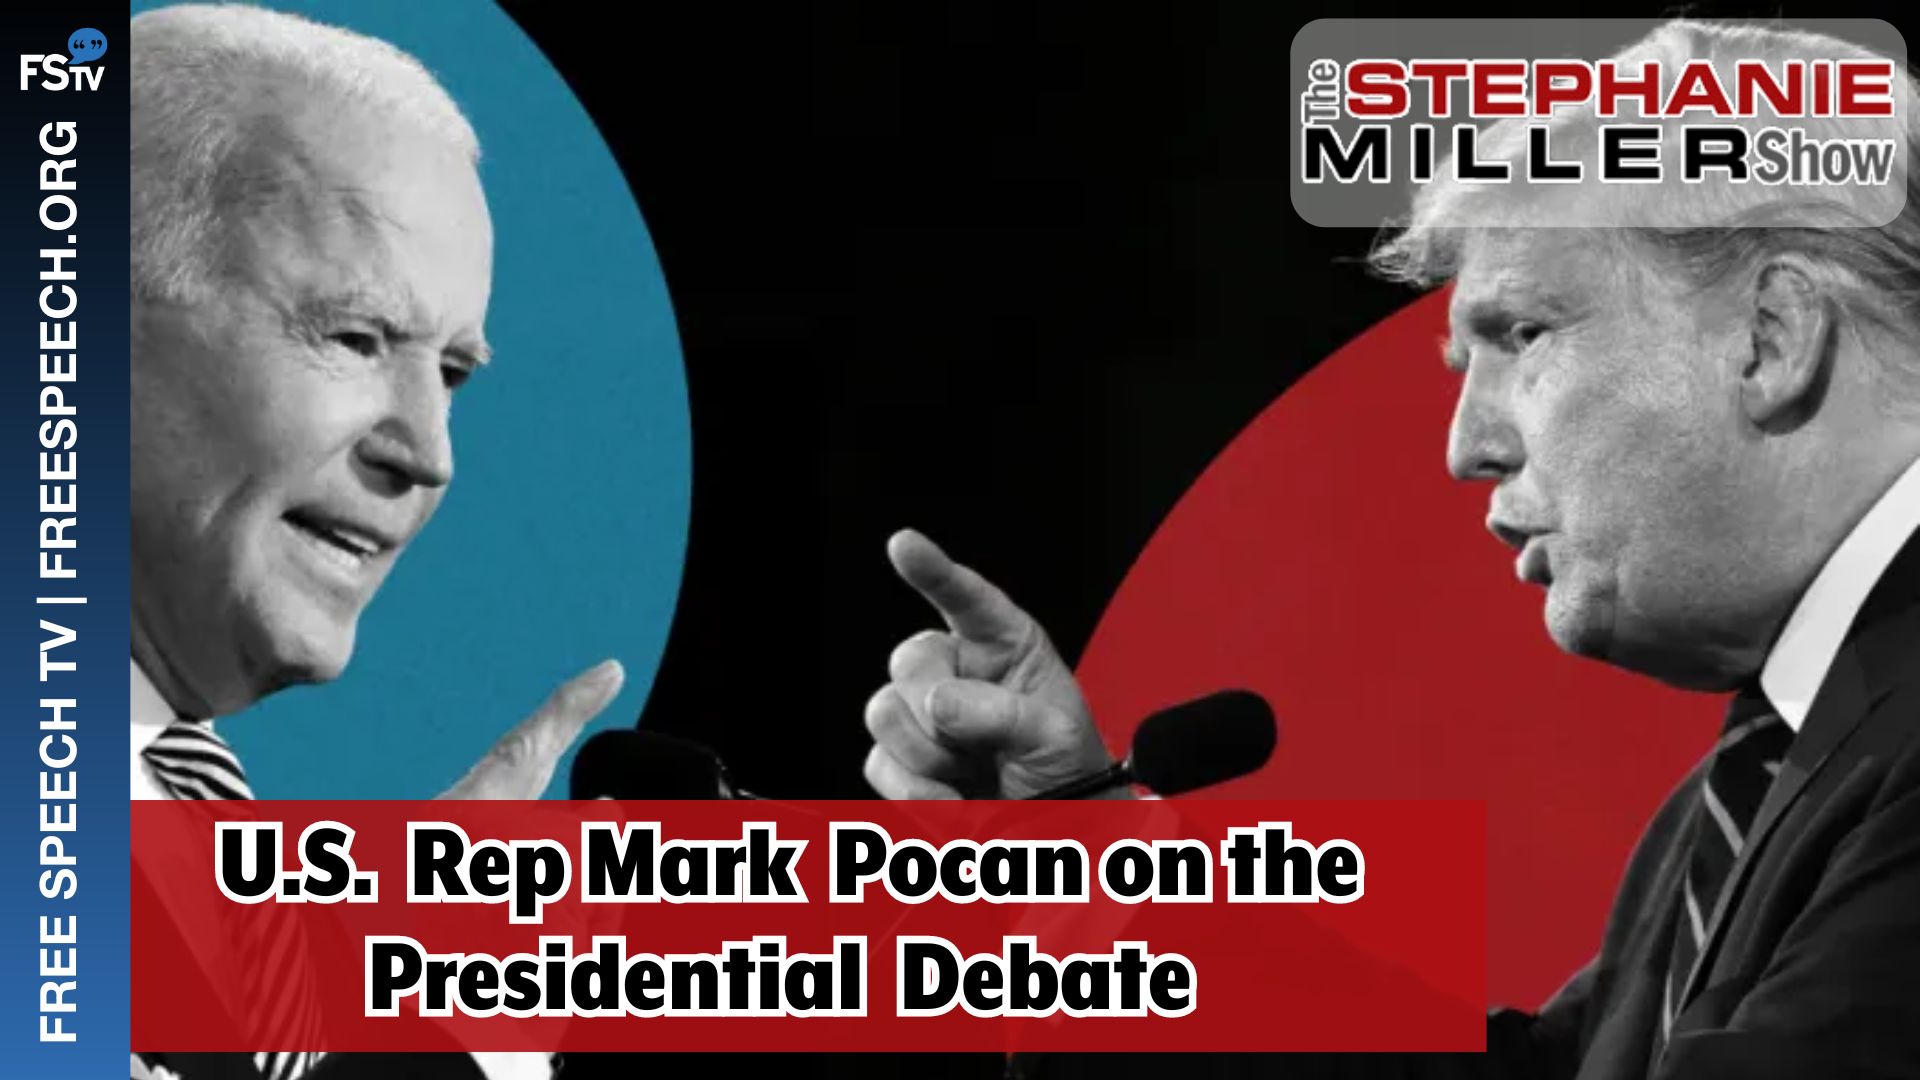 The Stephanie Miller Show | U.S. Rep Mark Pocan on the Presidential Debate